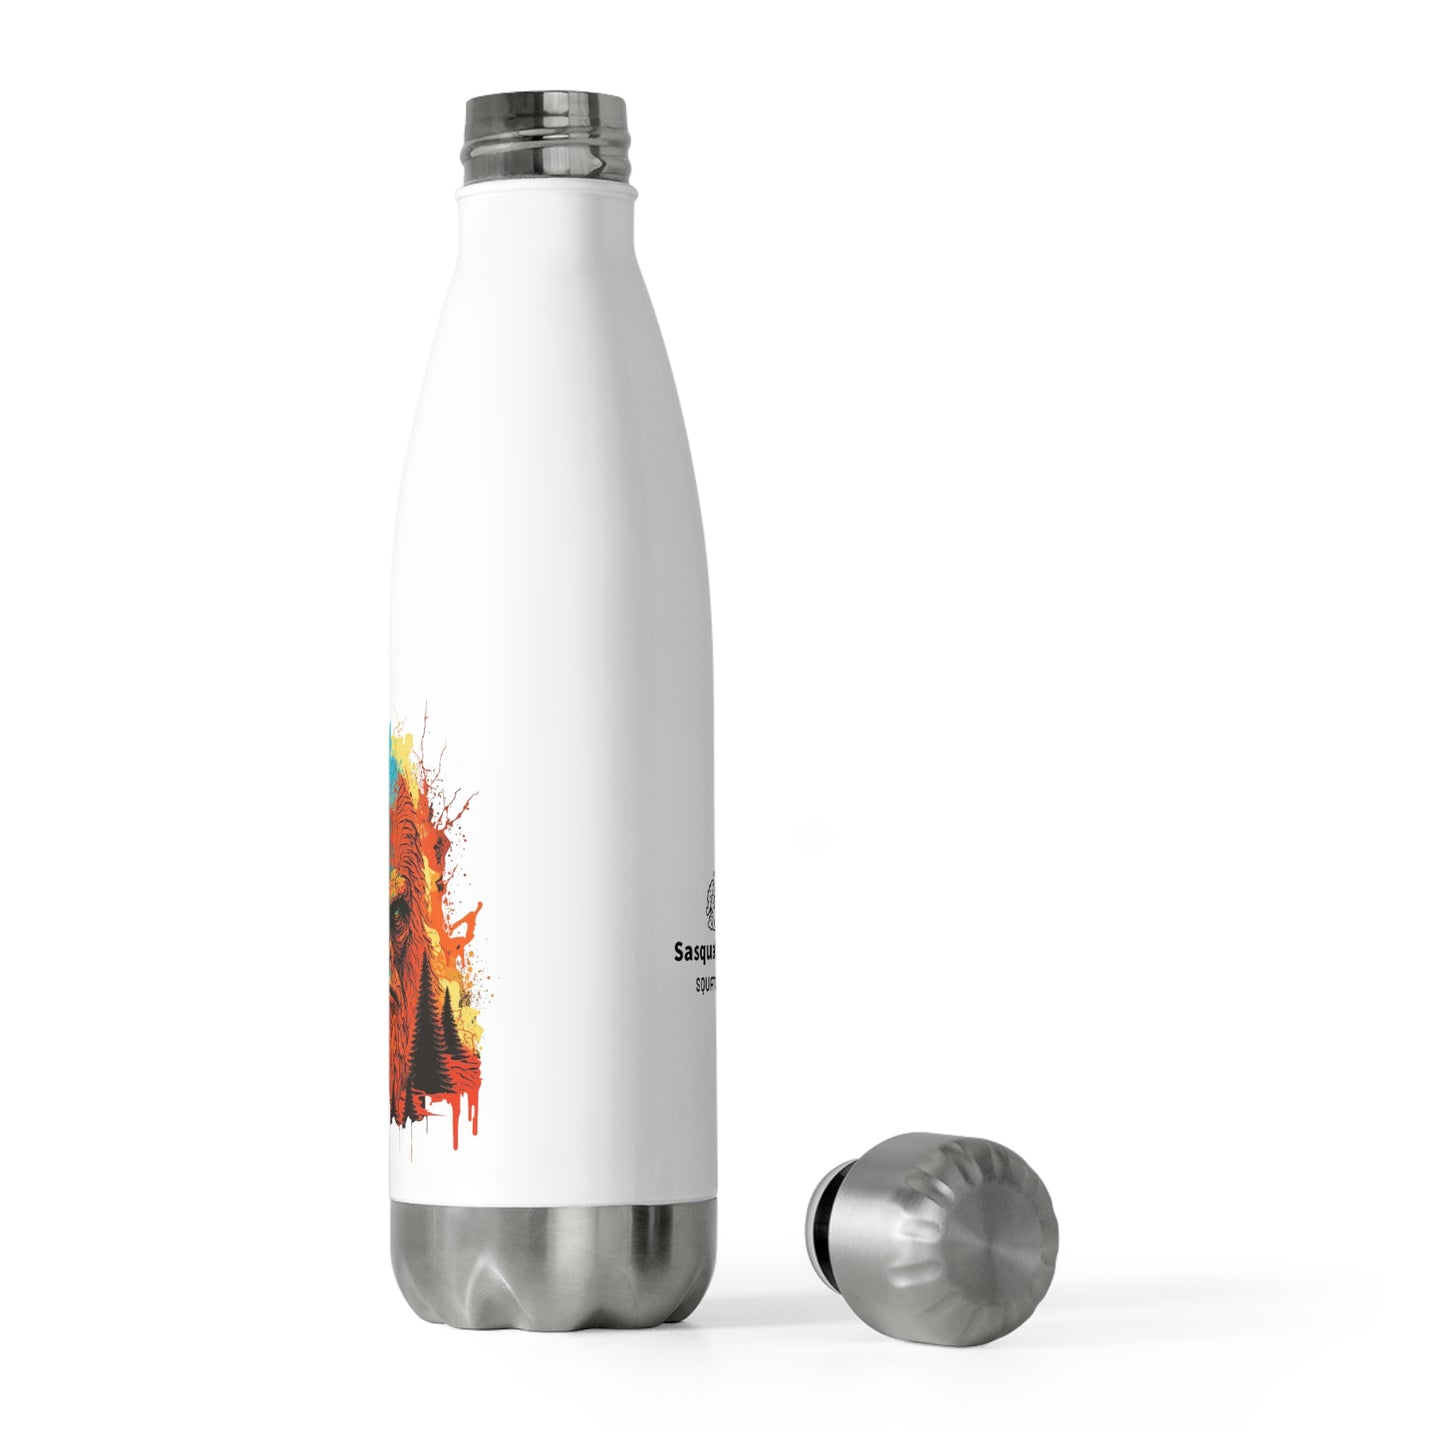 Paint-Squatch 20oz Insulated Bottle